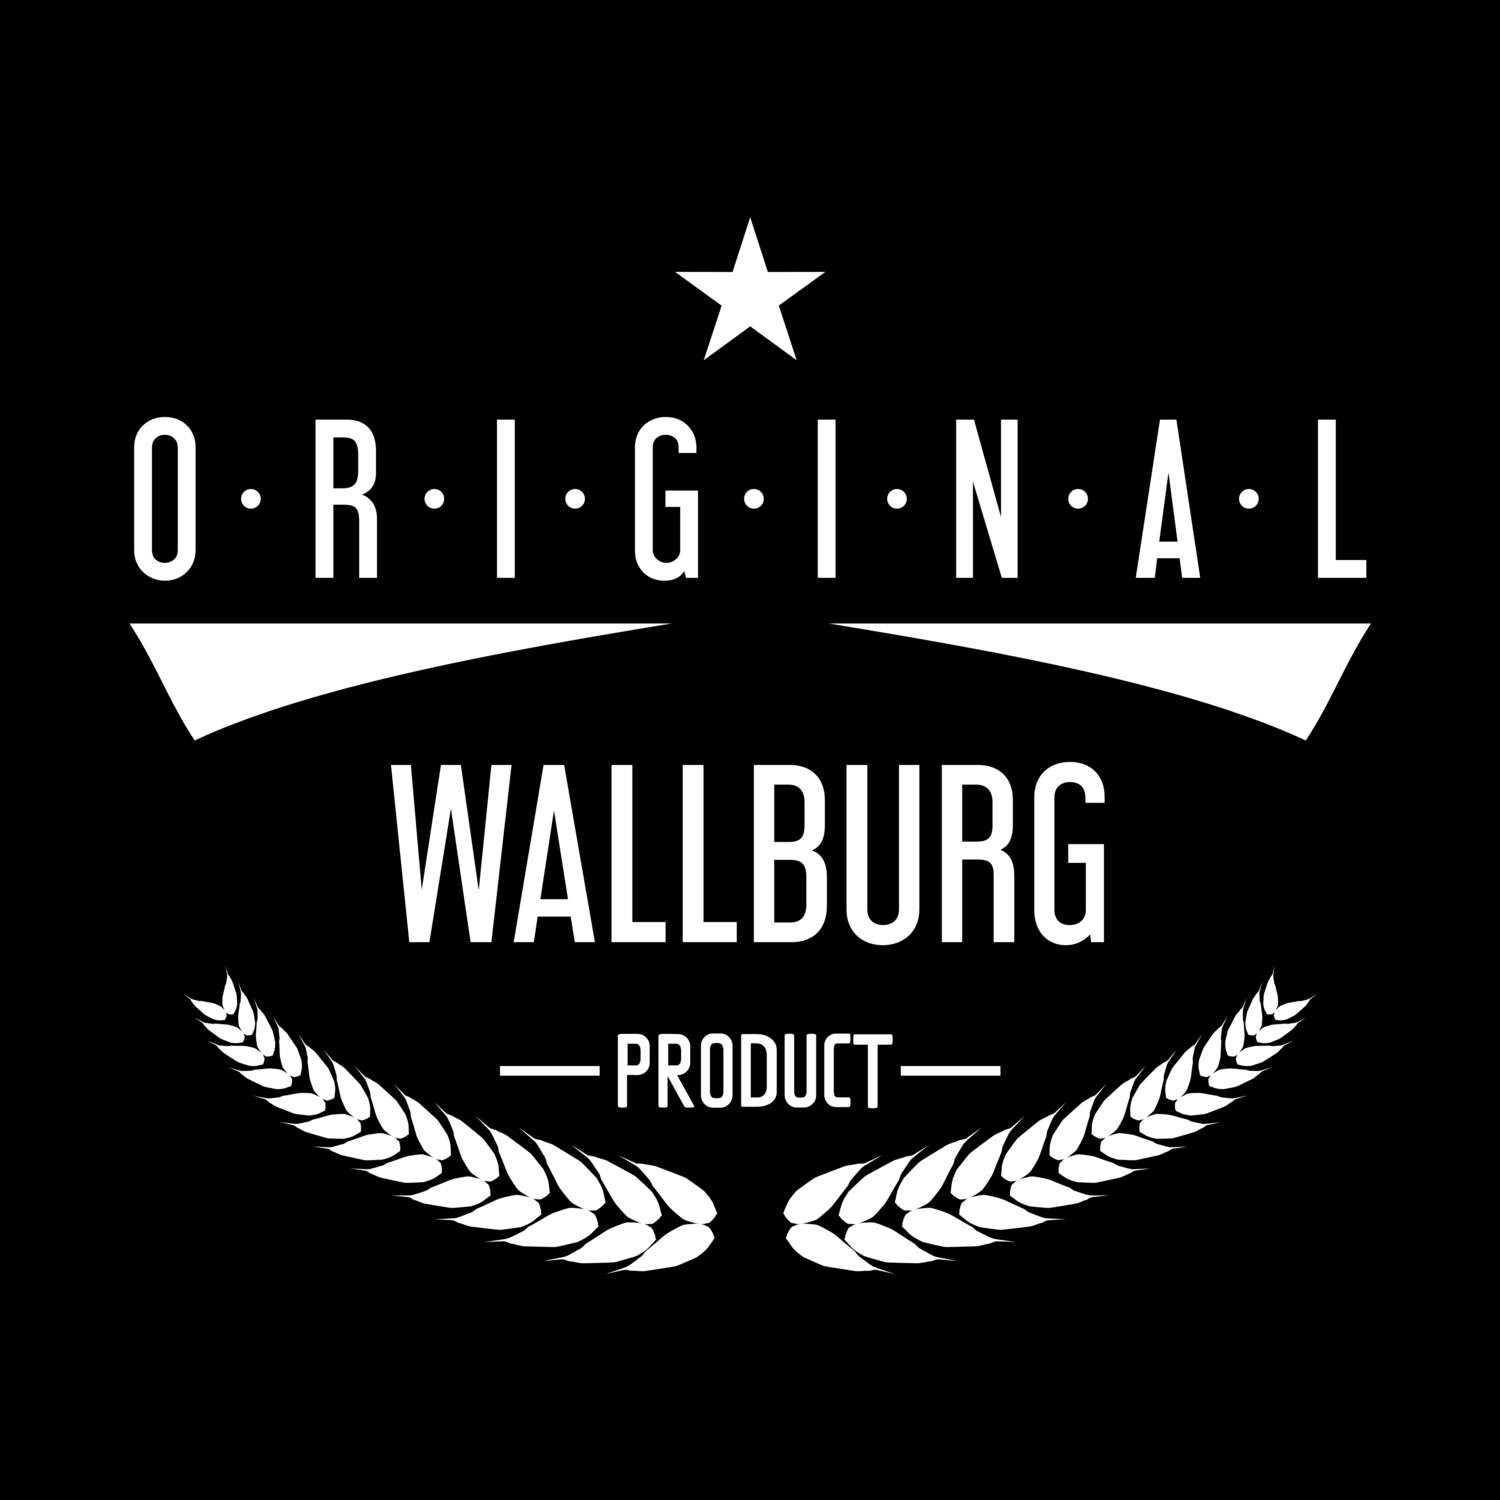 Wallburg T-Shirt »Original Product«